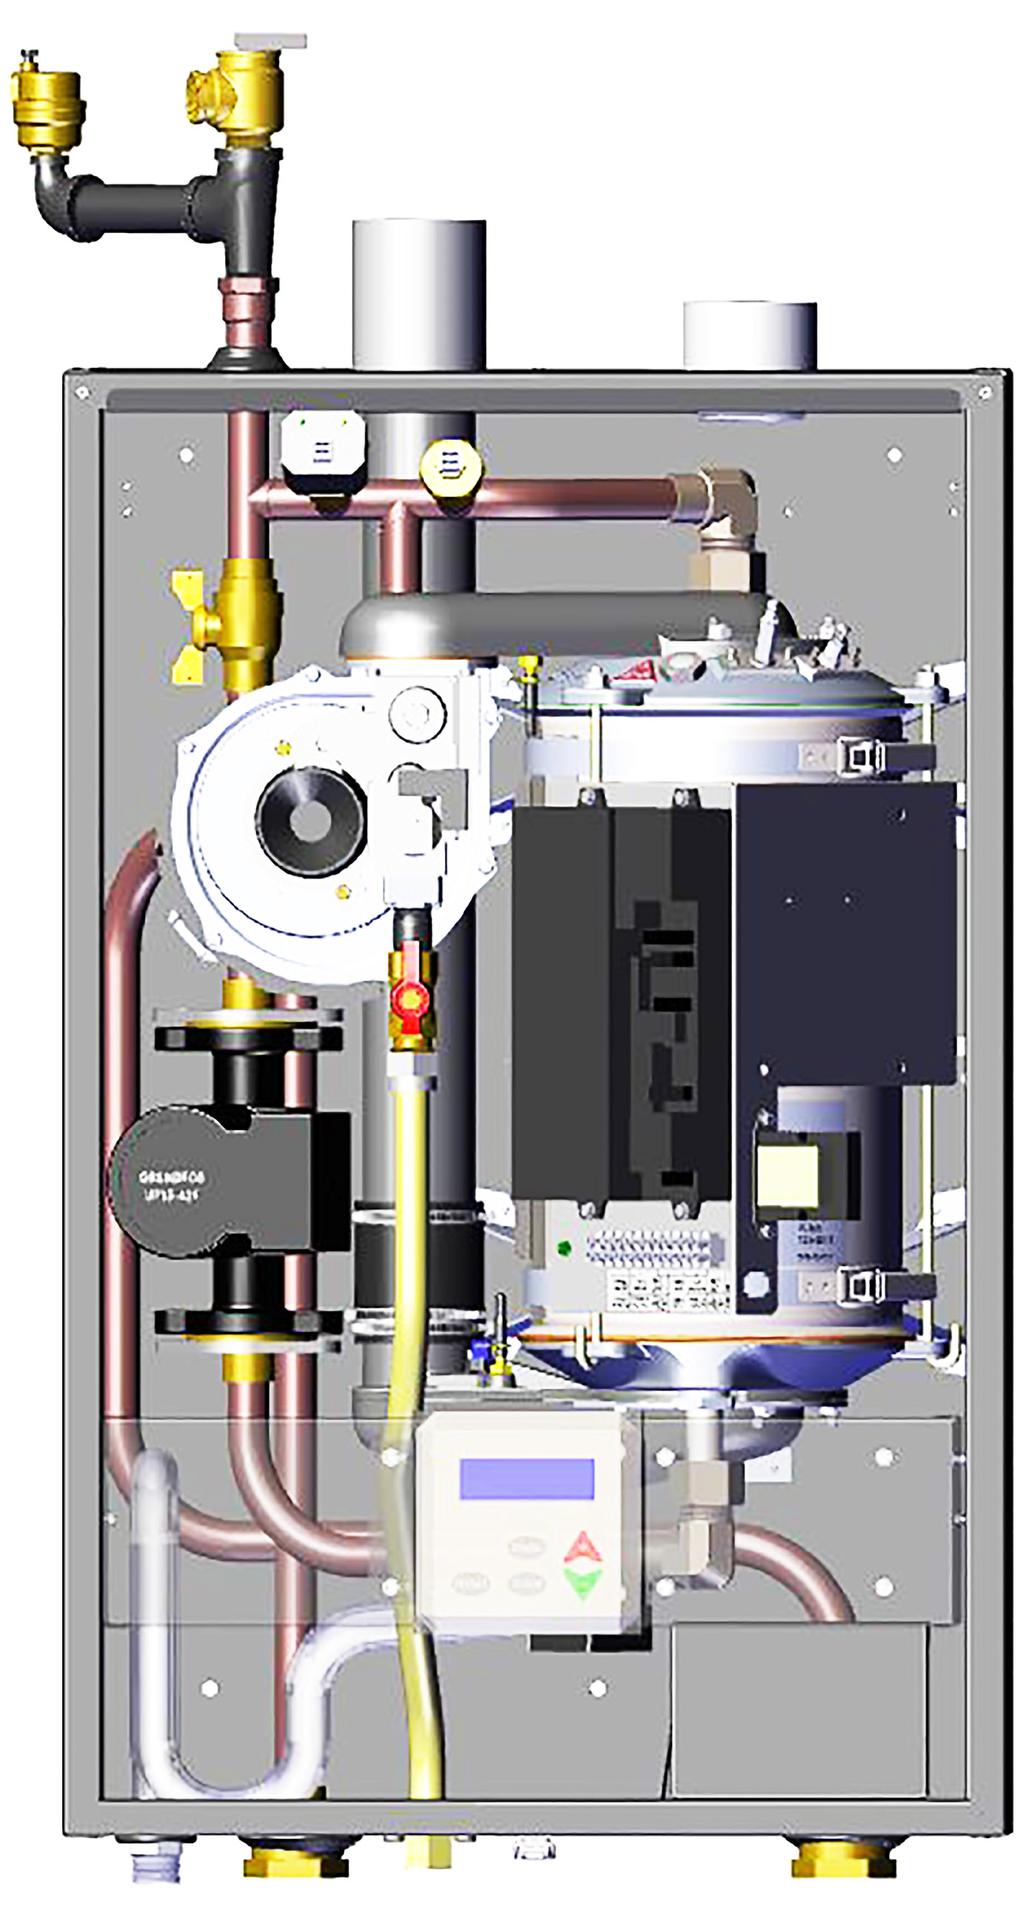 Mixture Pressure Test Port Combustion Air Blower Boiler Control Module Fuse And Holder Gas Shutoff Valve (Shown In Open Position) Heat Exchanger Heat Exchanger Pump Transformer ASME Plate Heat